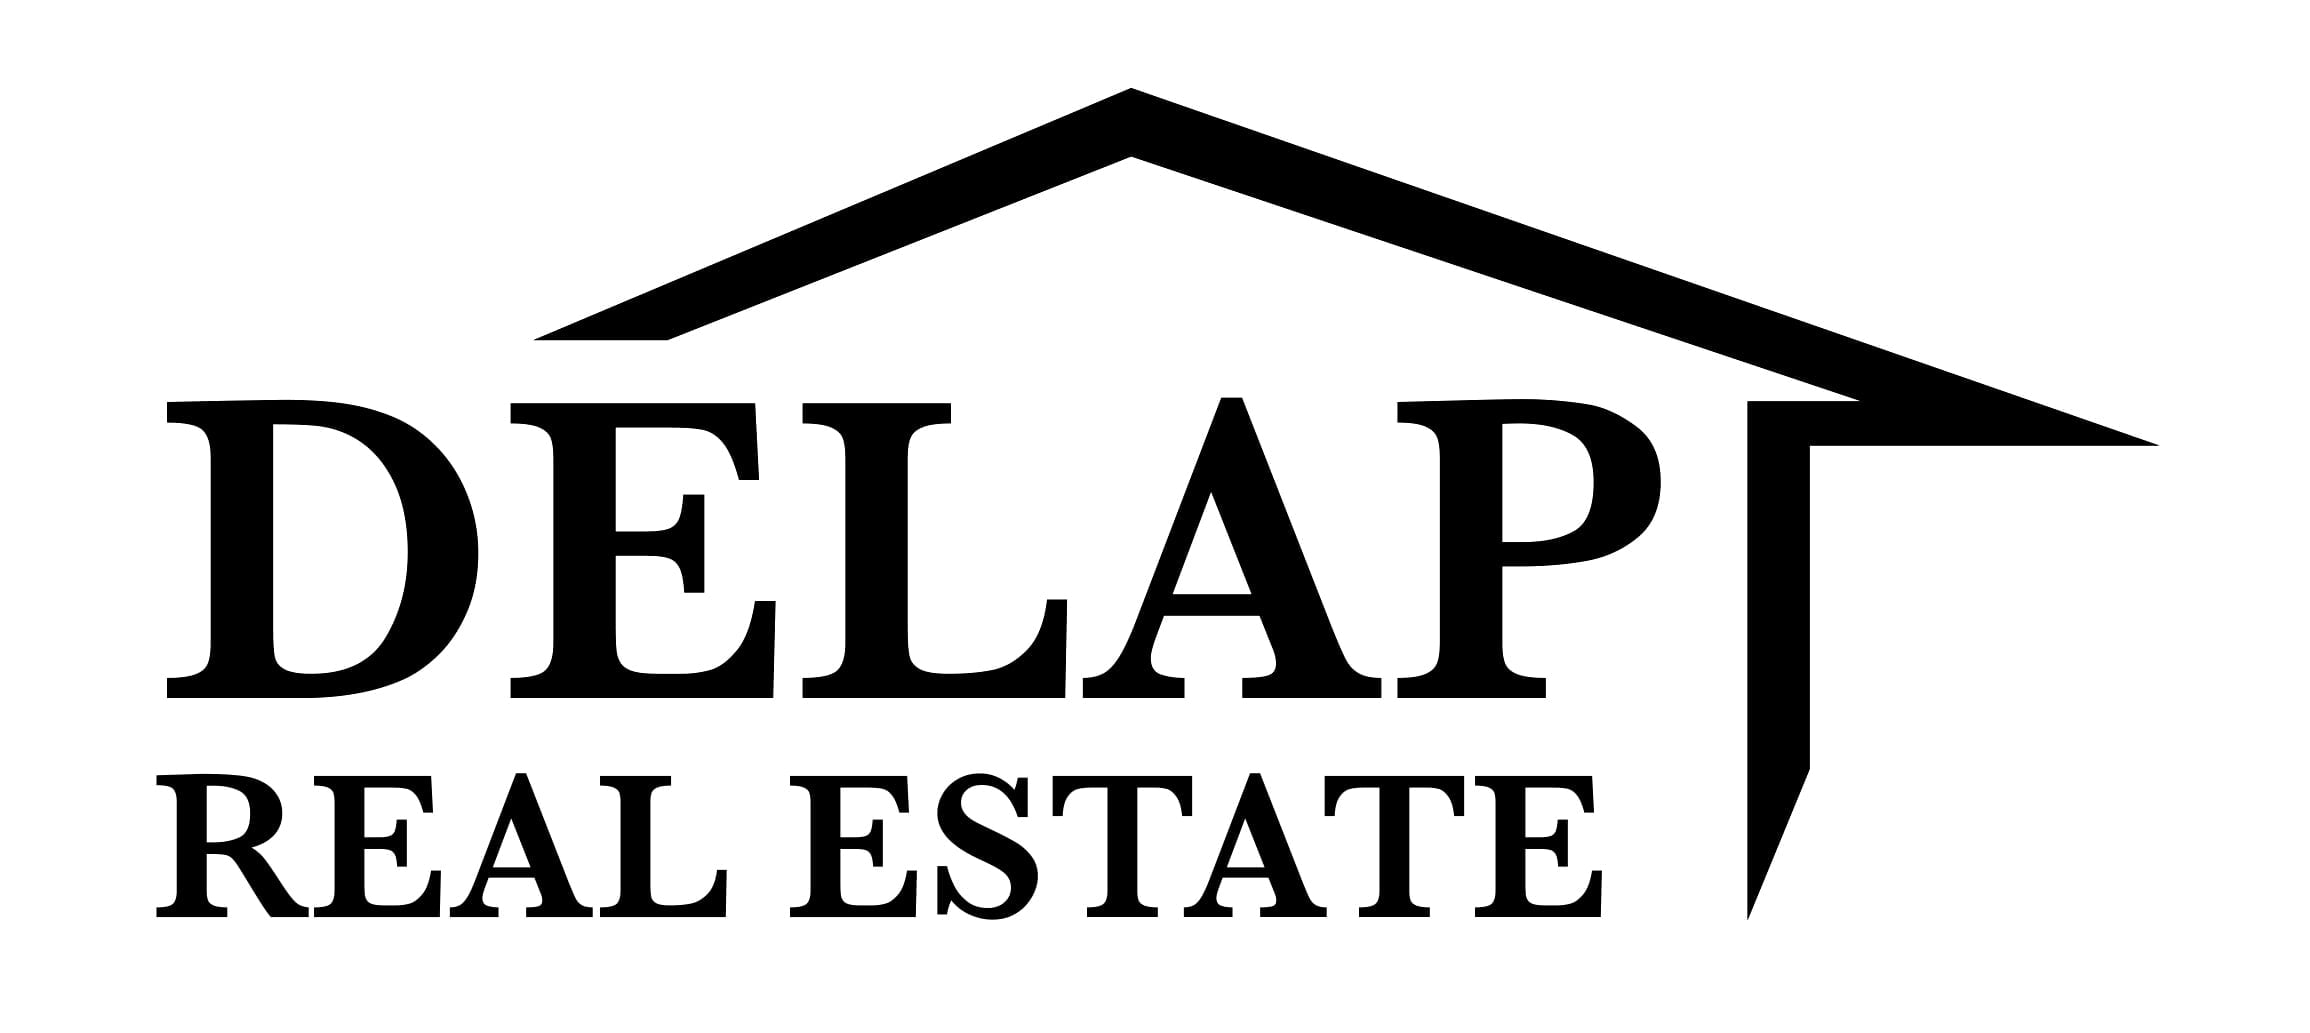 Delap real estate logo black and white